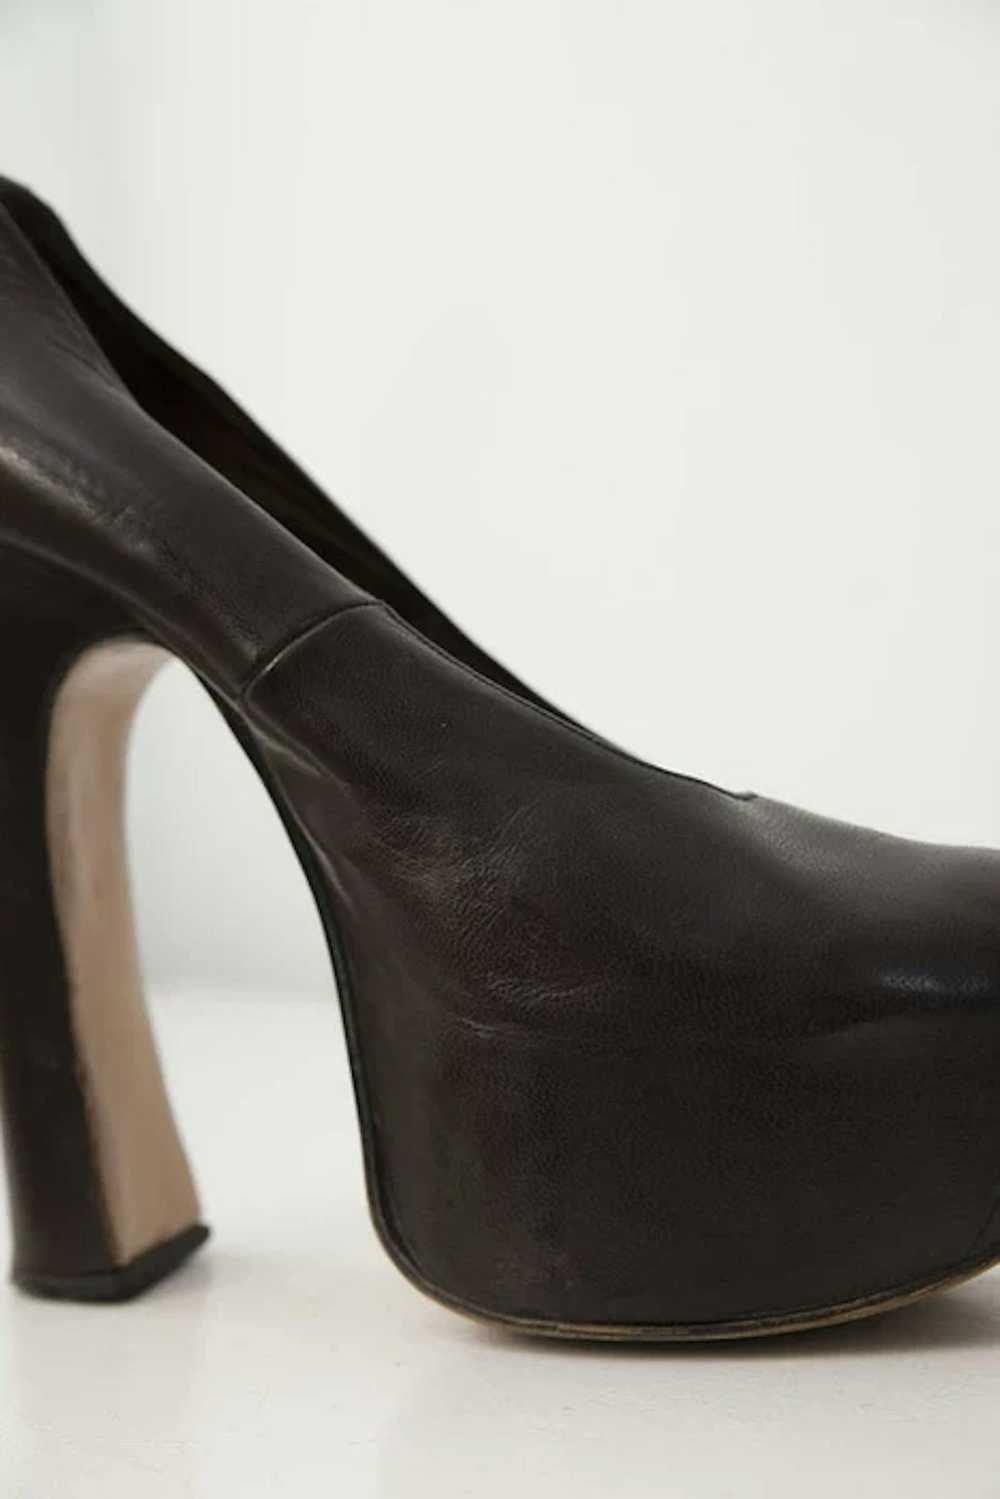 Vivienne Westwood 90's Court Platform heels - image 8